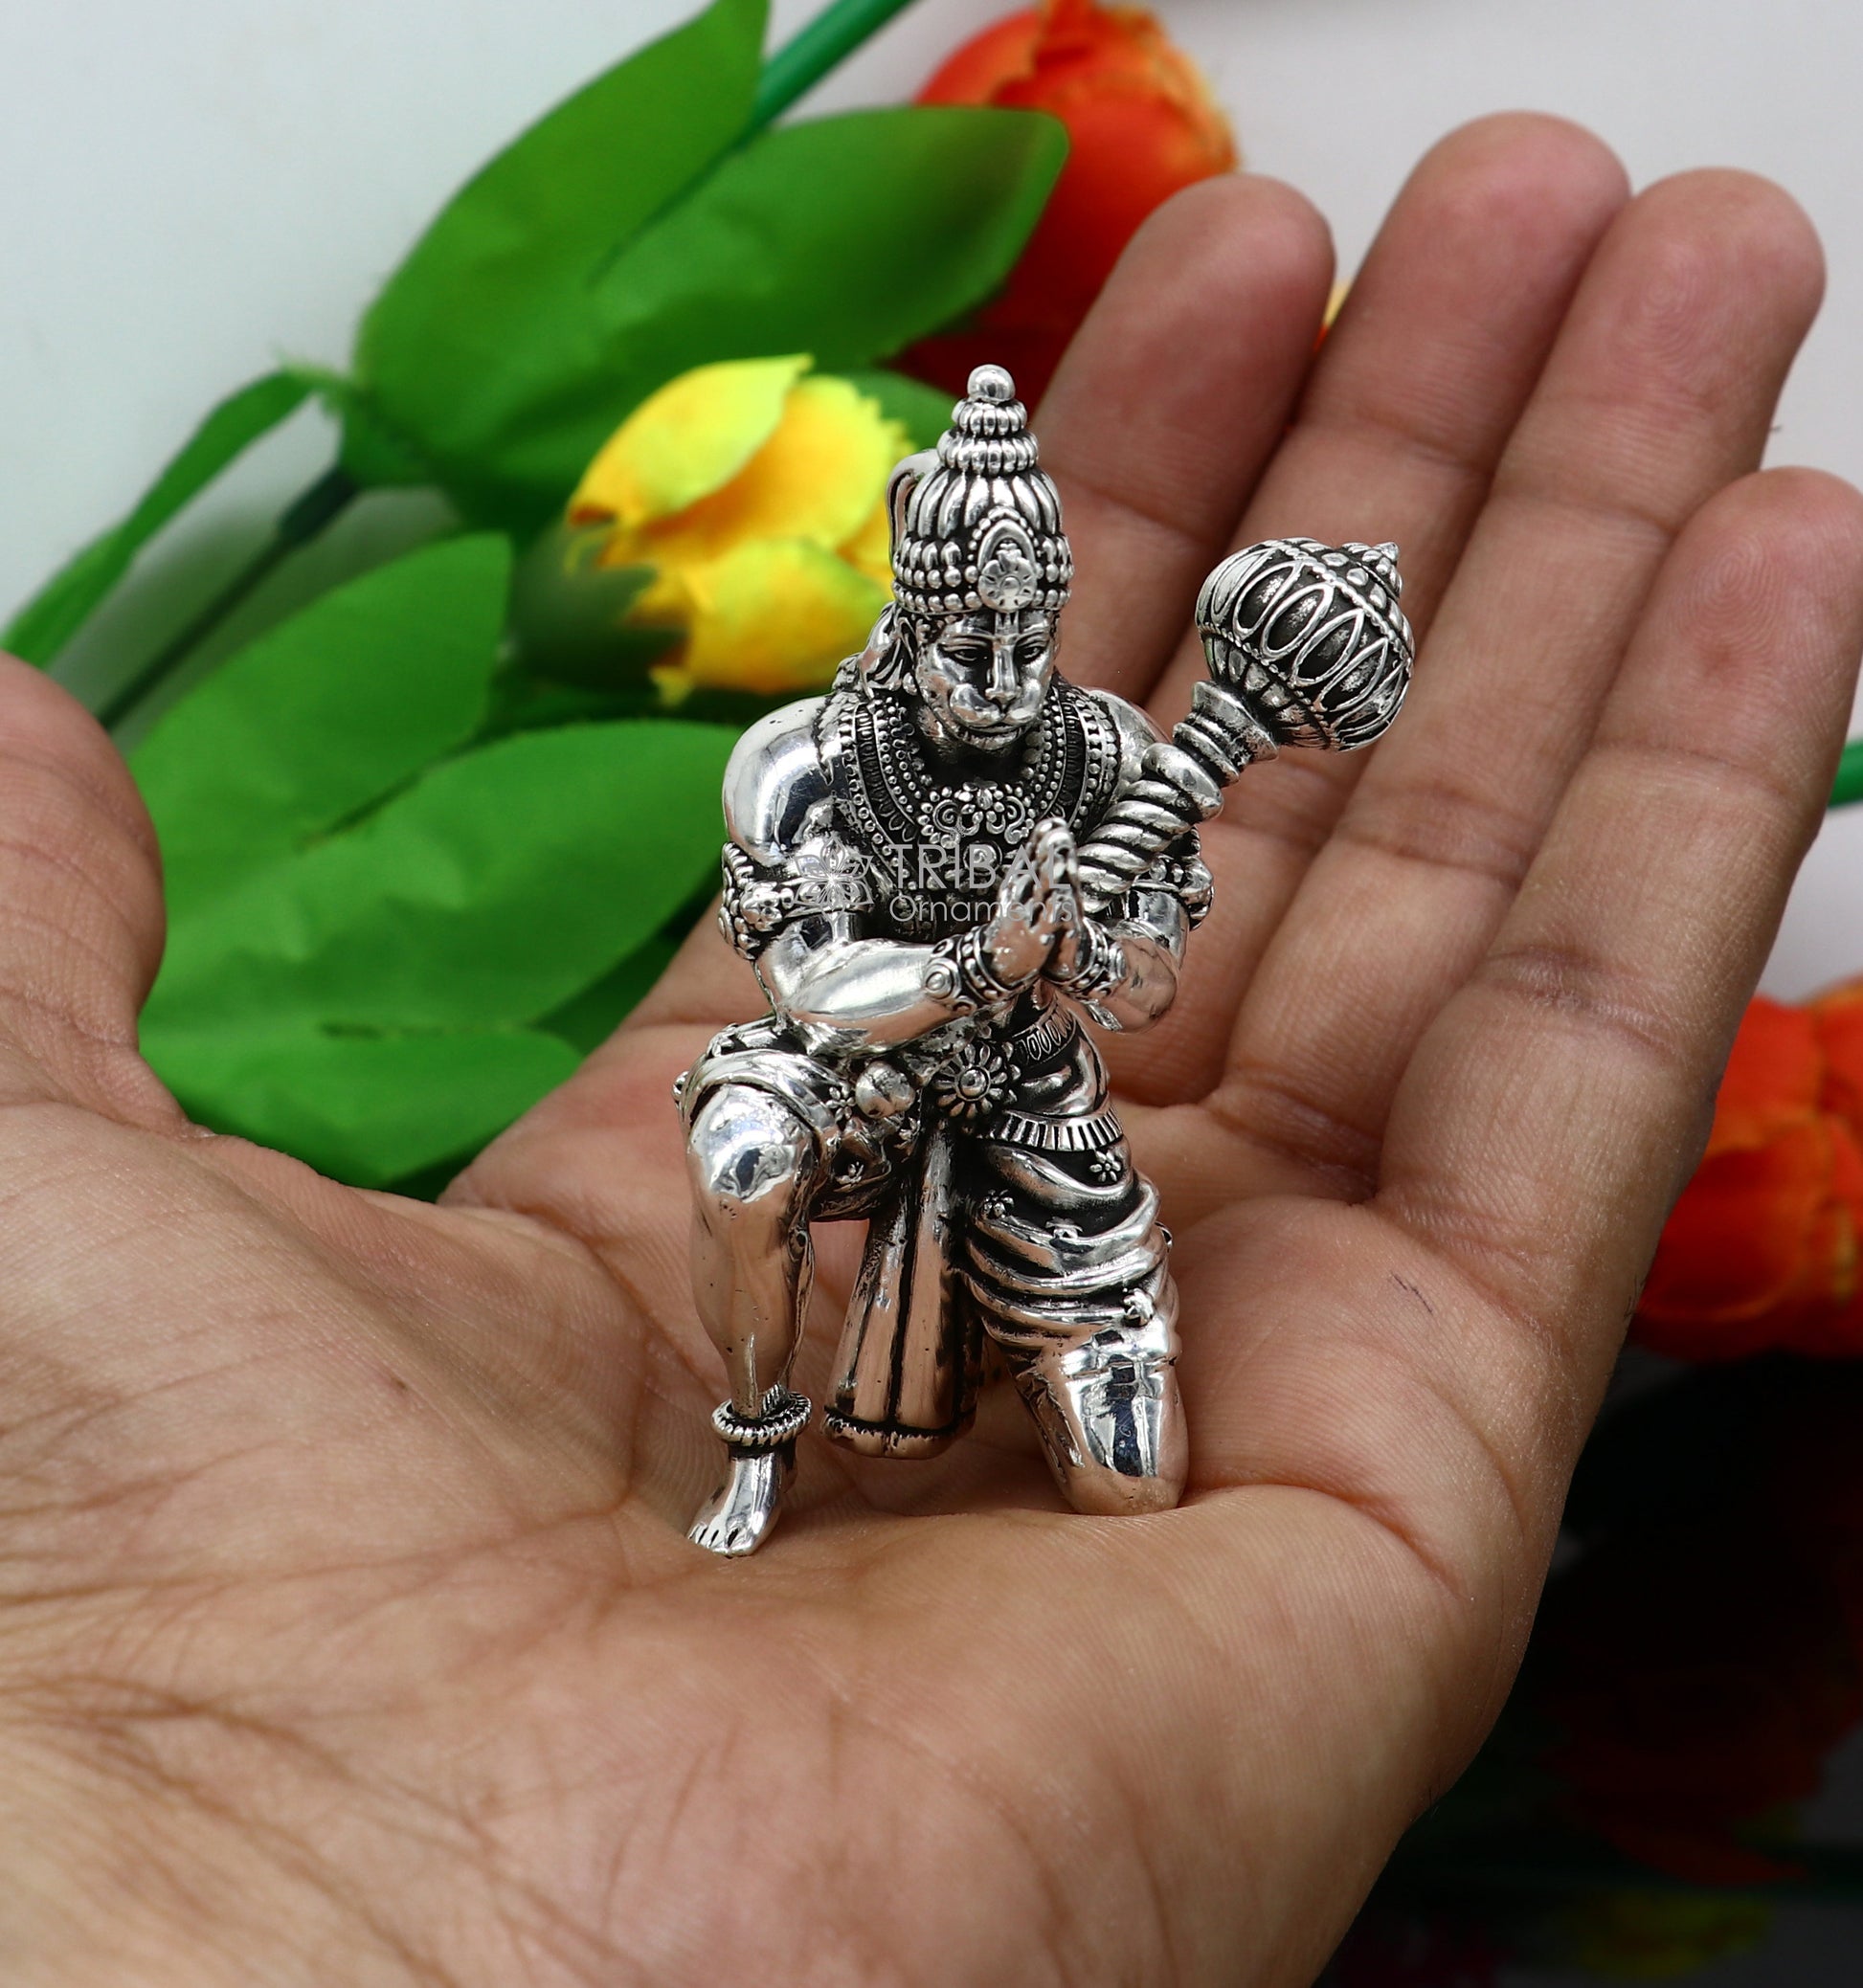 2"/2.5" 925 silver handmade Lord hanuman statue, best puja or gifting god hanuman statue sculpture home temple puja art figurine art618 - TRIBAL ORNAMENTS